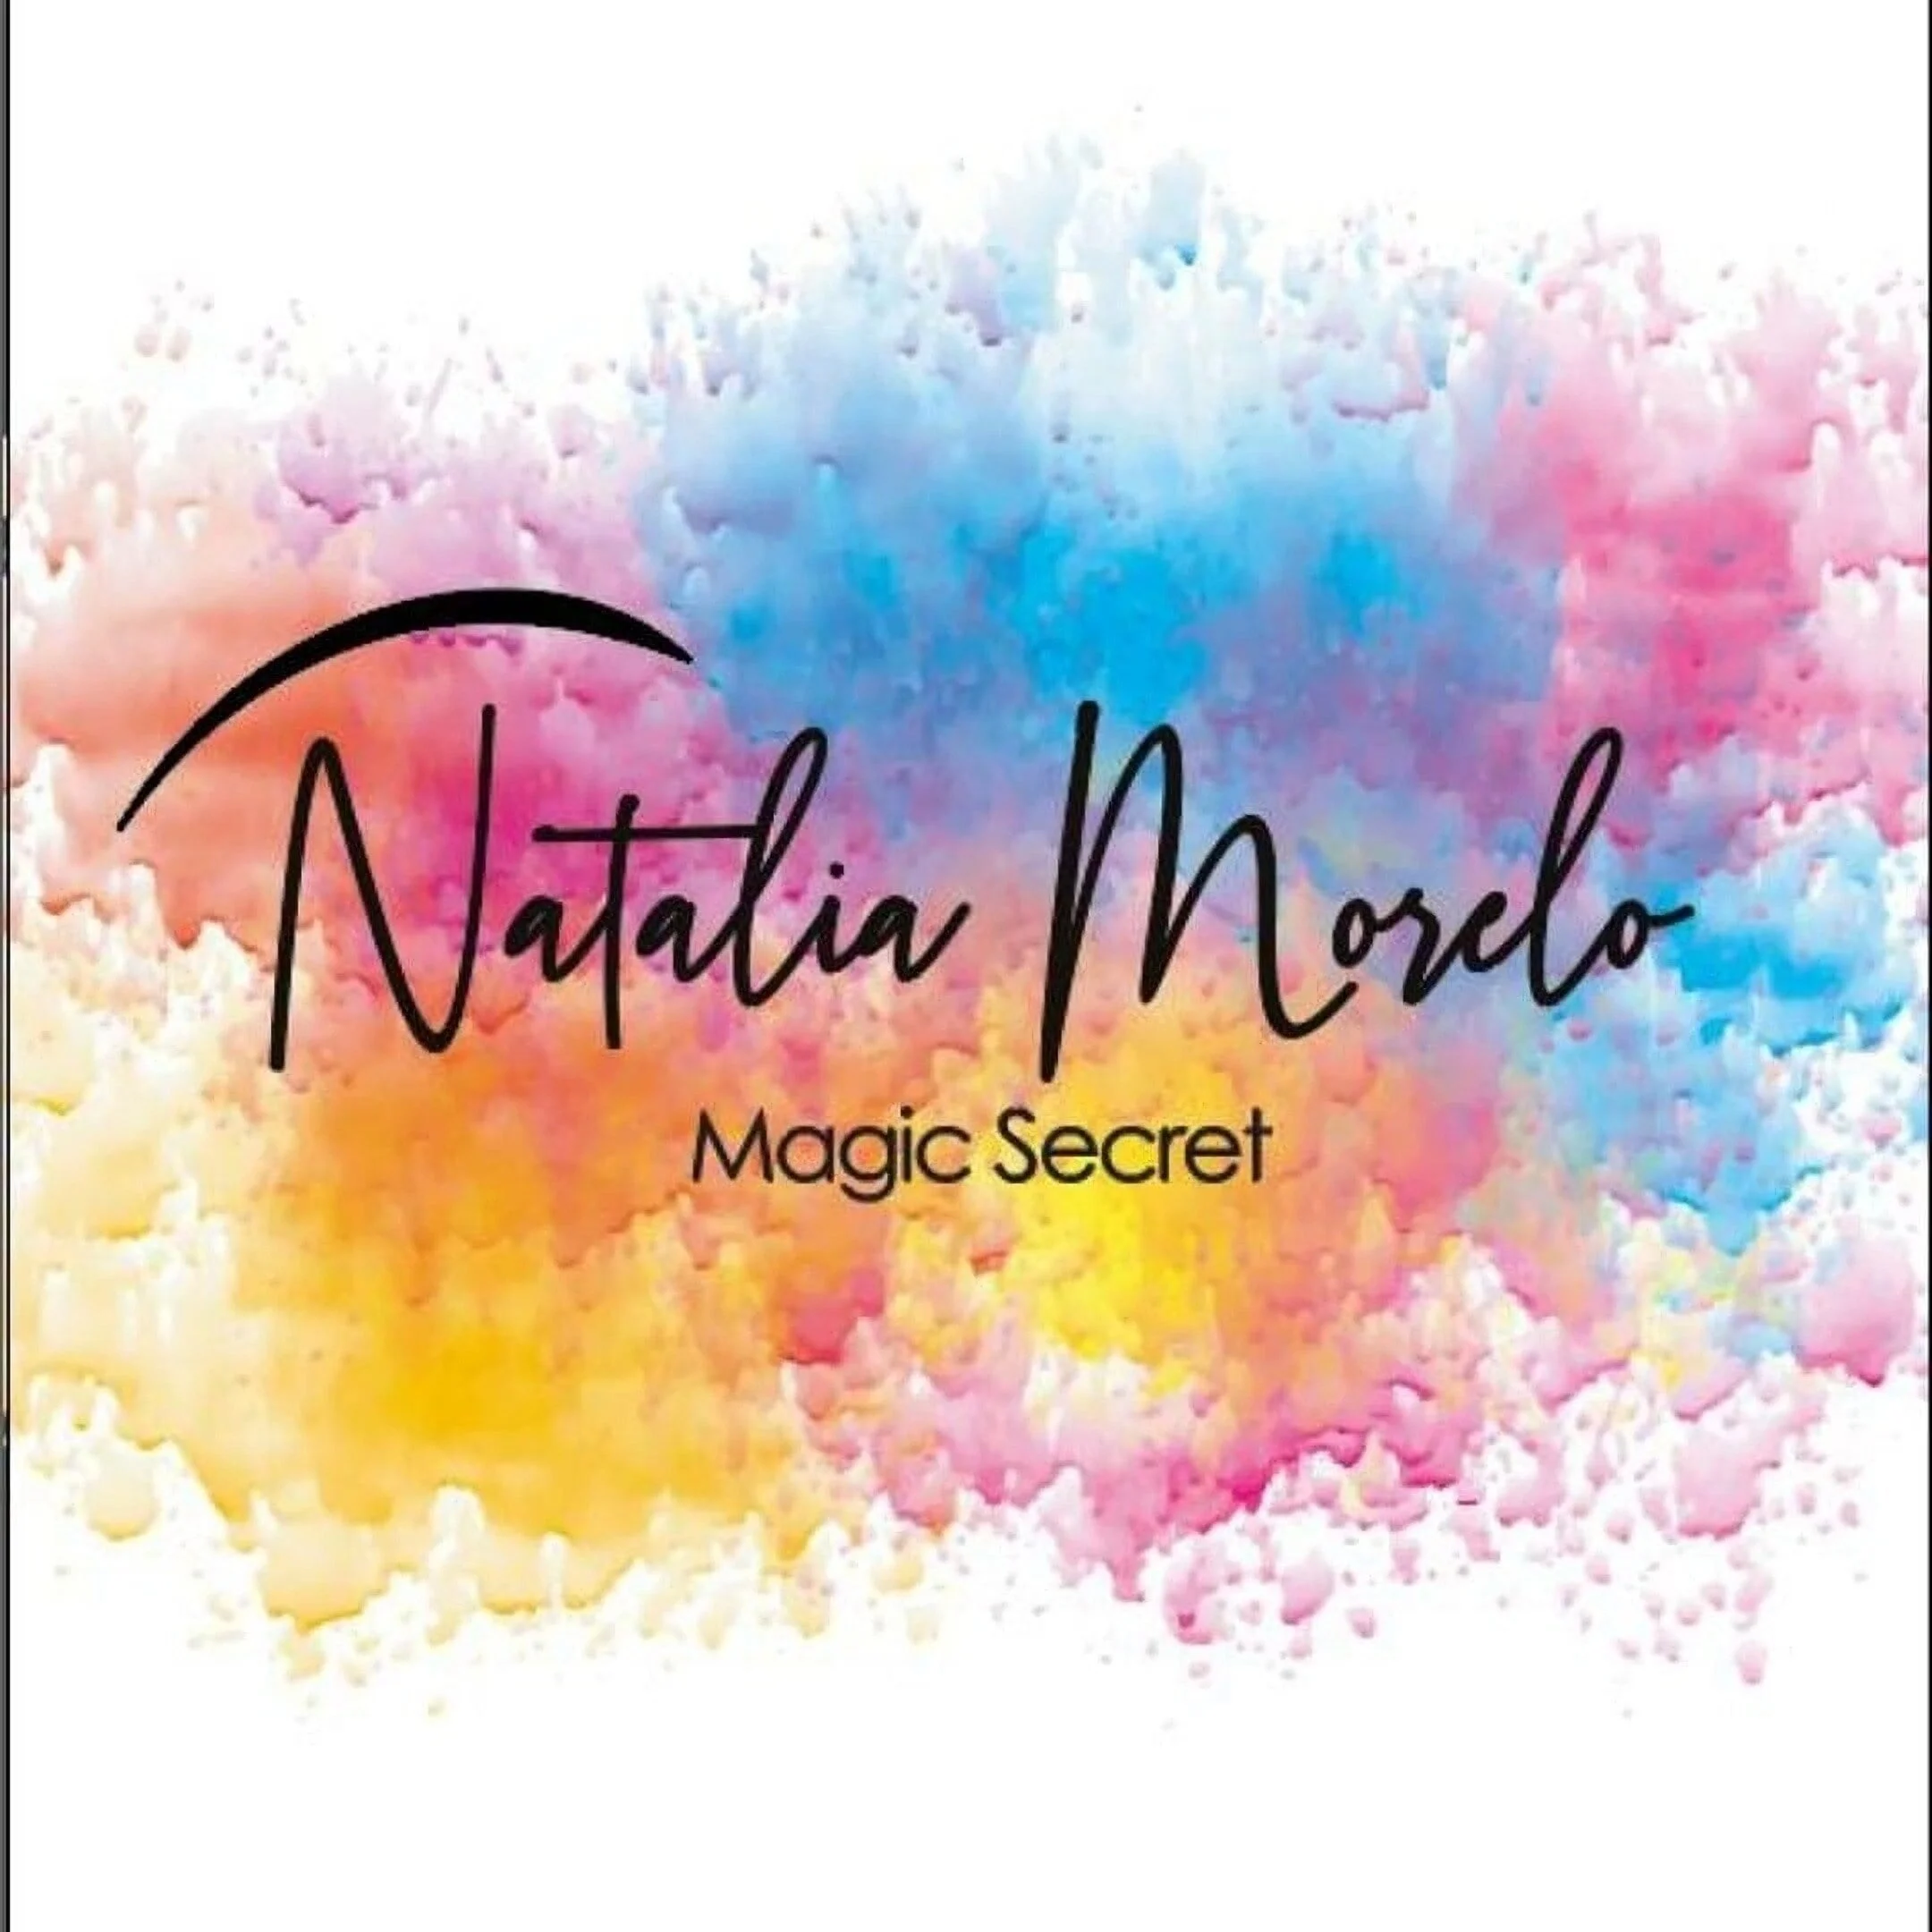 Natalia Morelo Magic Secret-1091